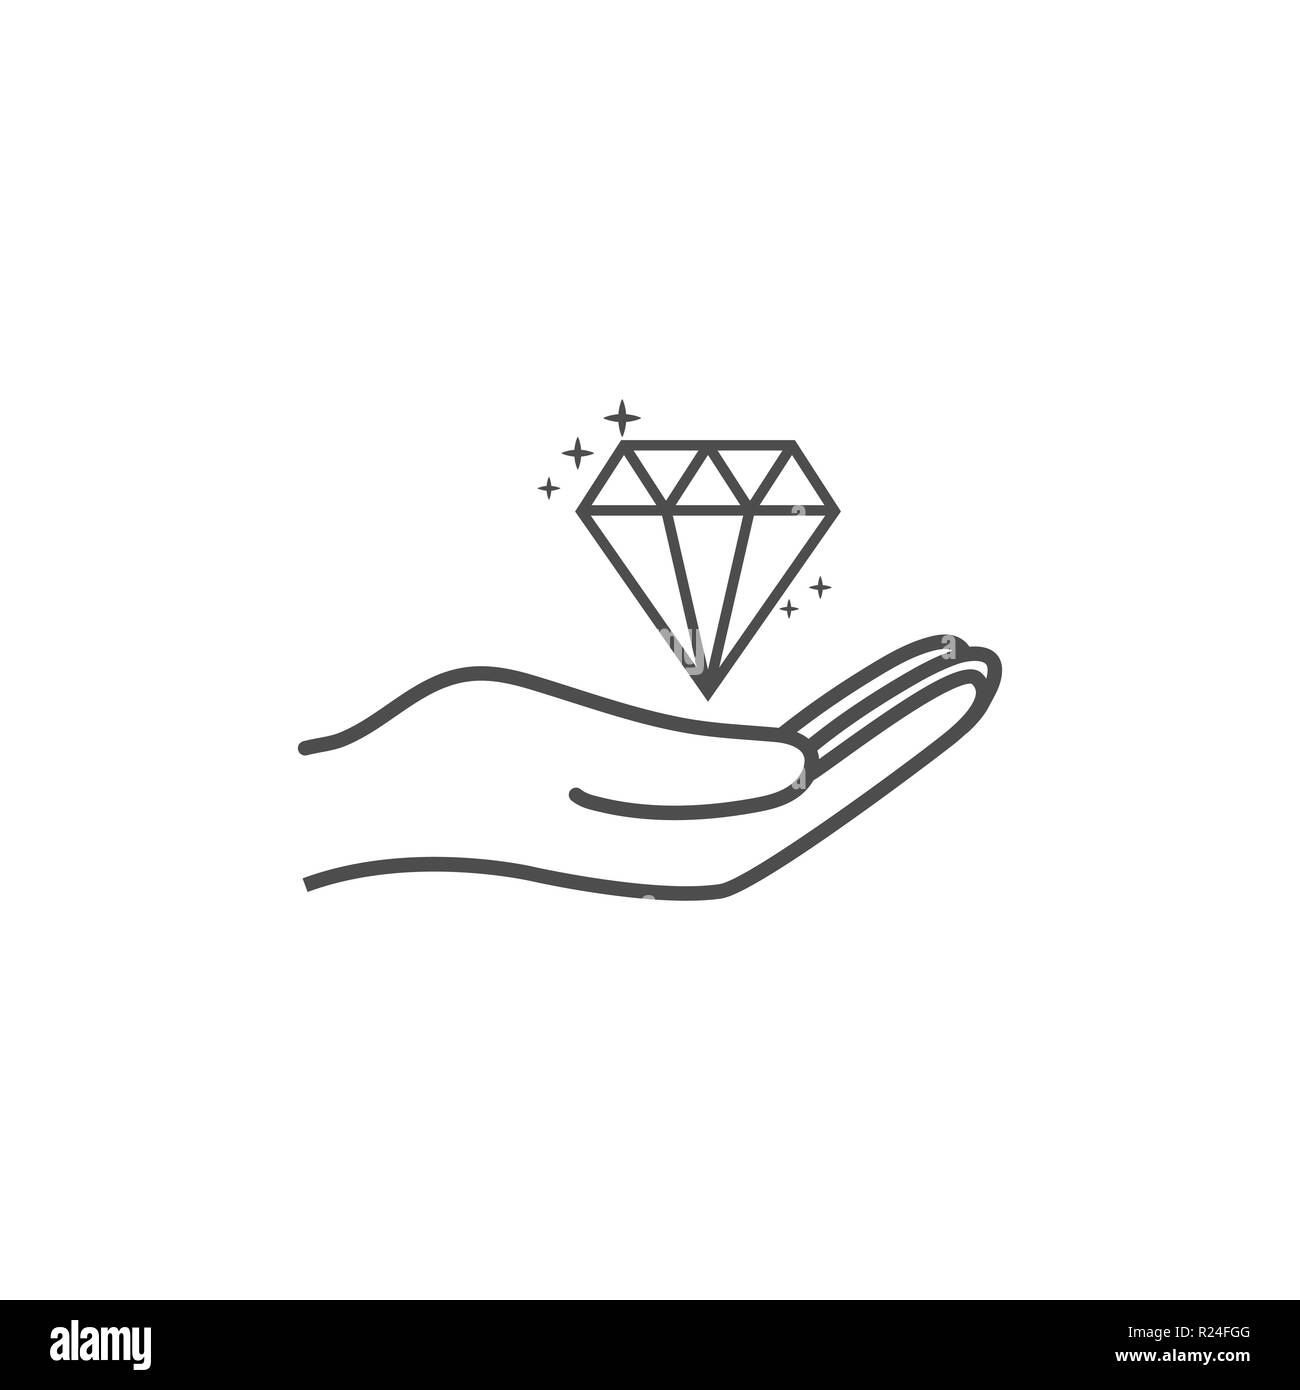 Symbol Hand Mit Diamant Symbol Offnen Vector Illustration Flach Stock Vektorgrafik Alamy